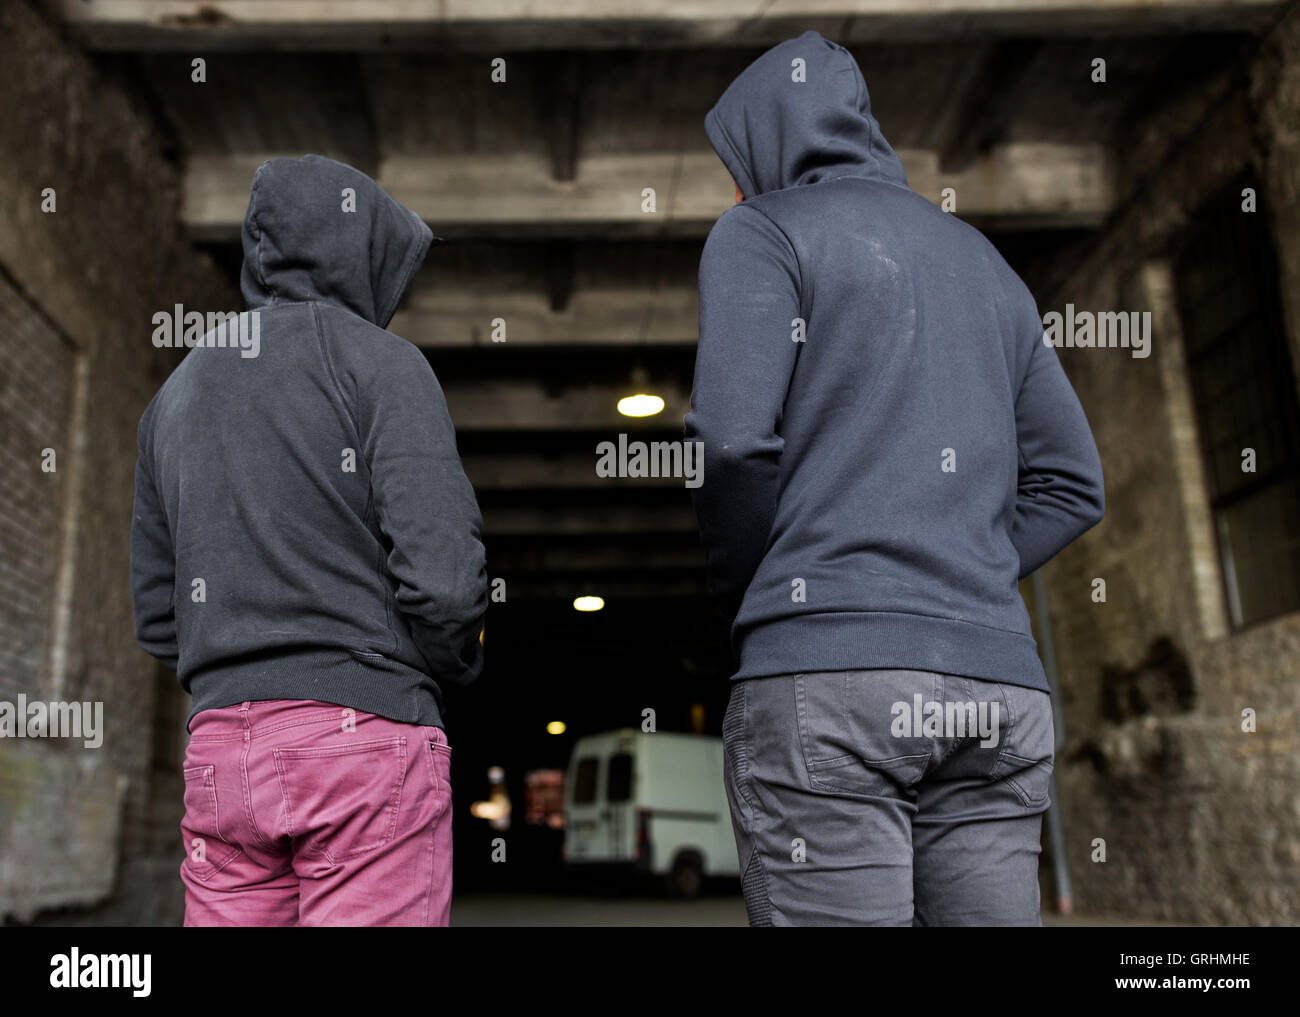 addict men or criminals in hoodies on street Stock Photo